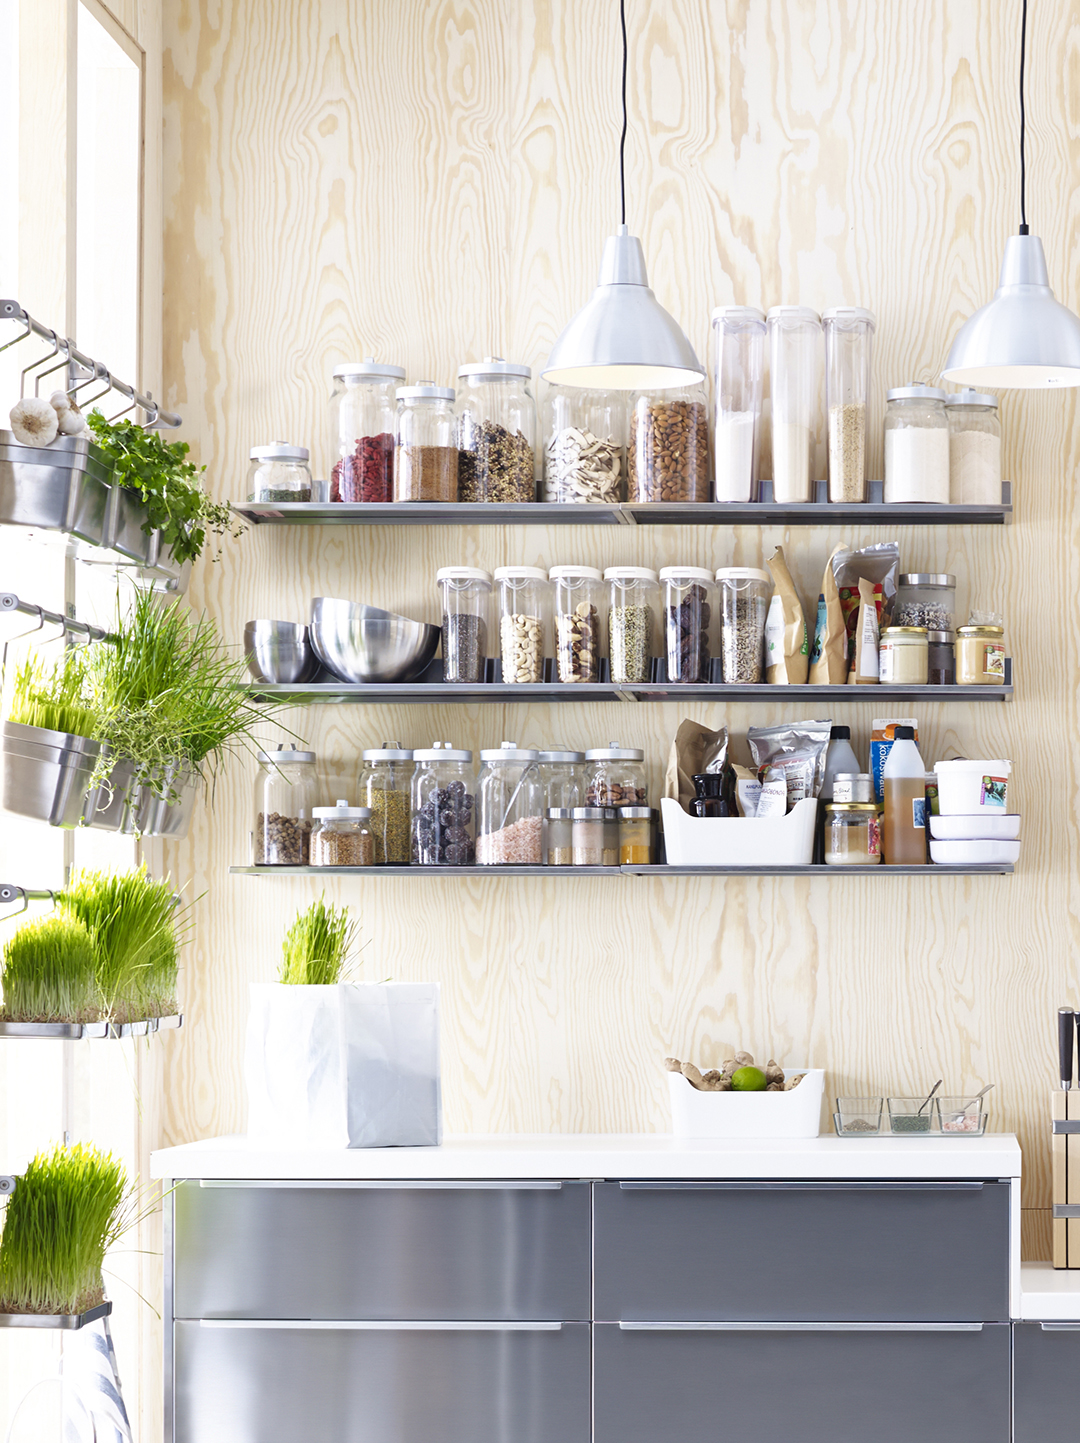 Storage Ideas for Small Kitchen Spaces